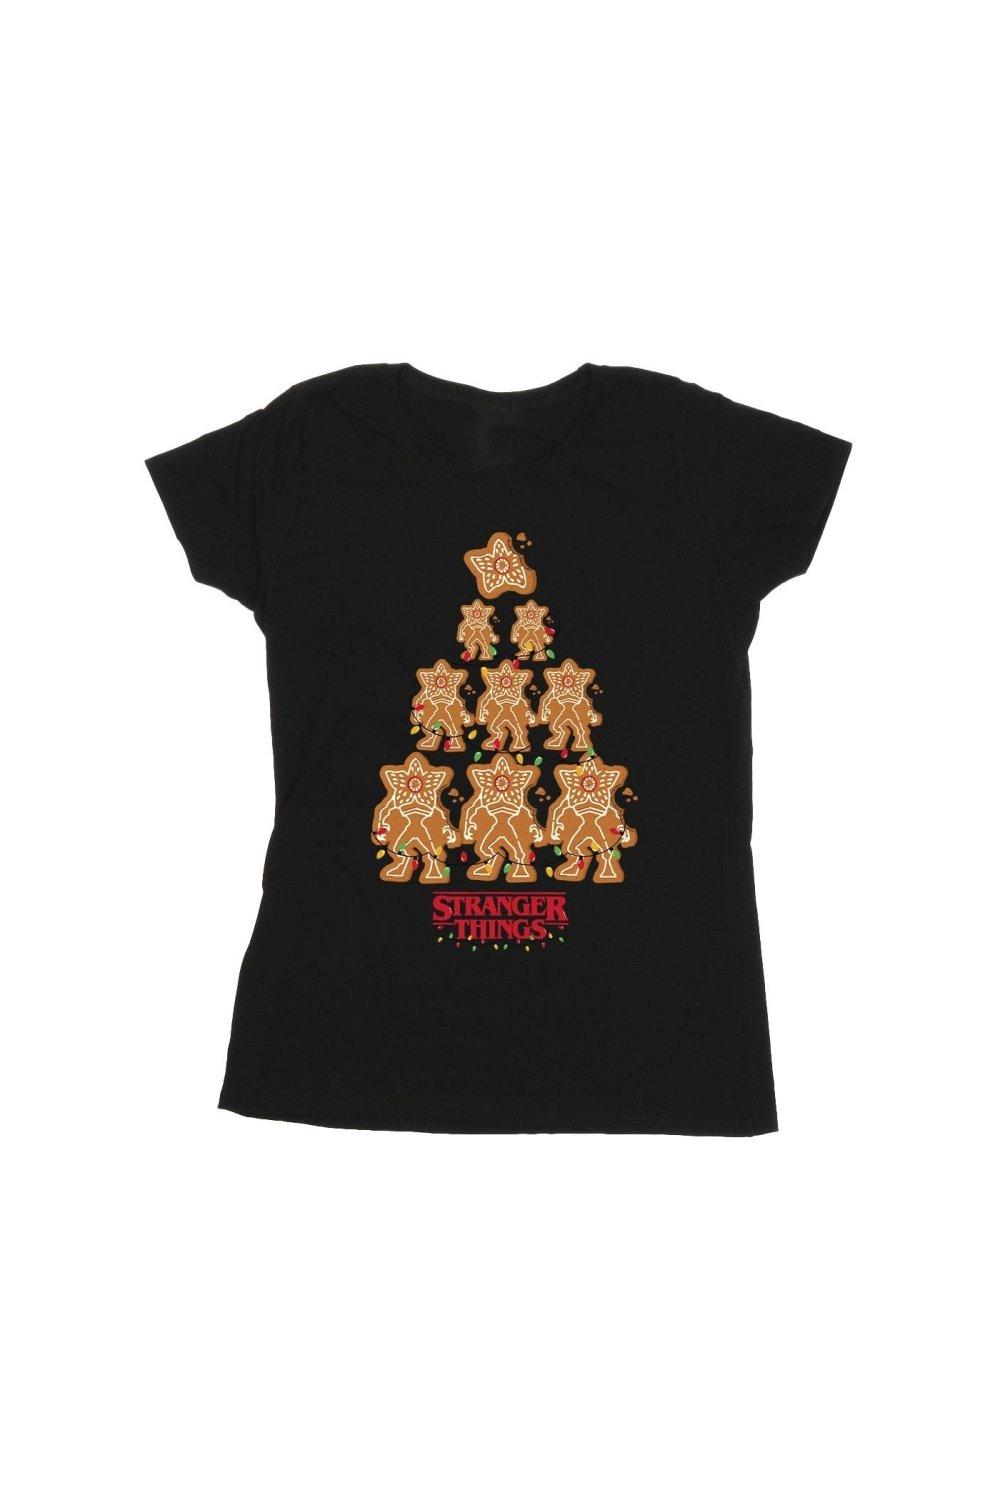 T-Shirts | Stranger Things Gingerbread Cotton T-Shirt | Netflix